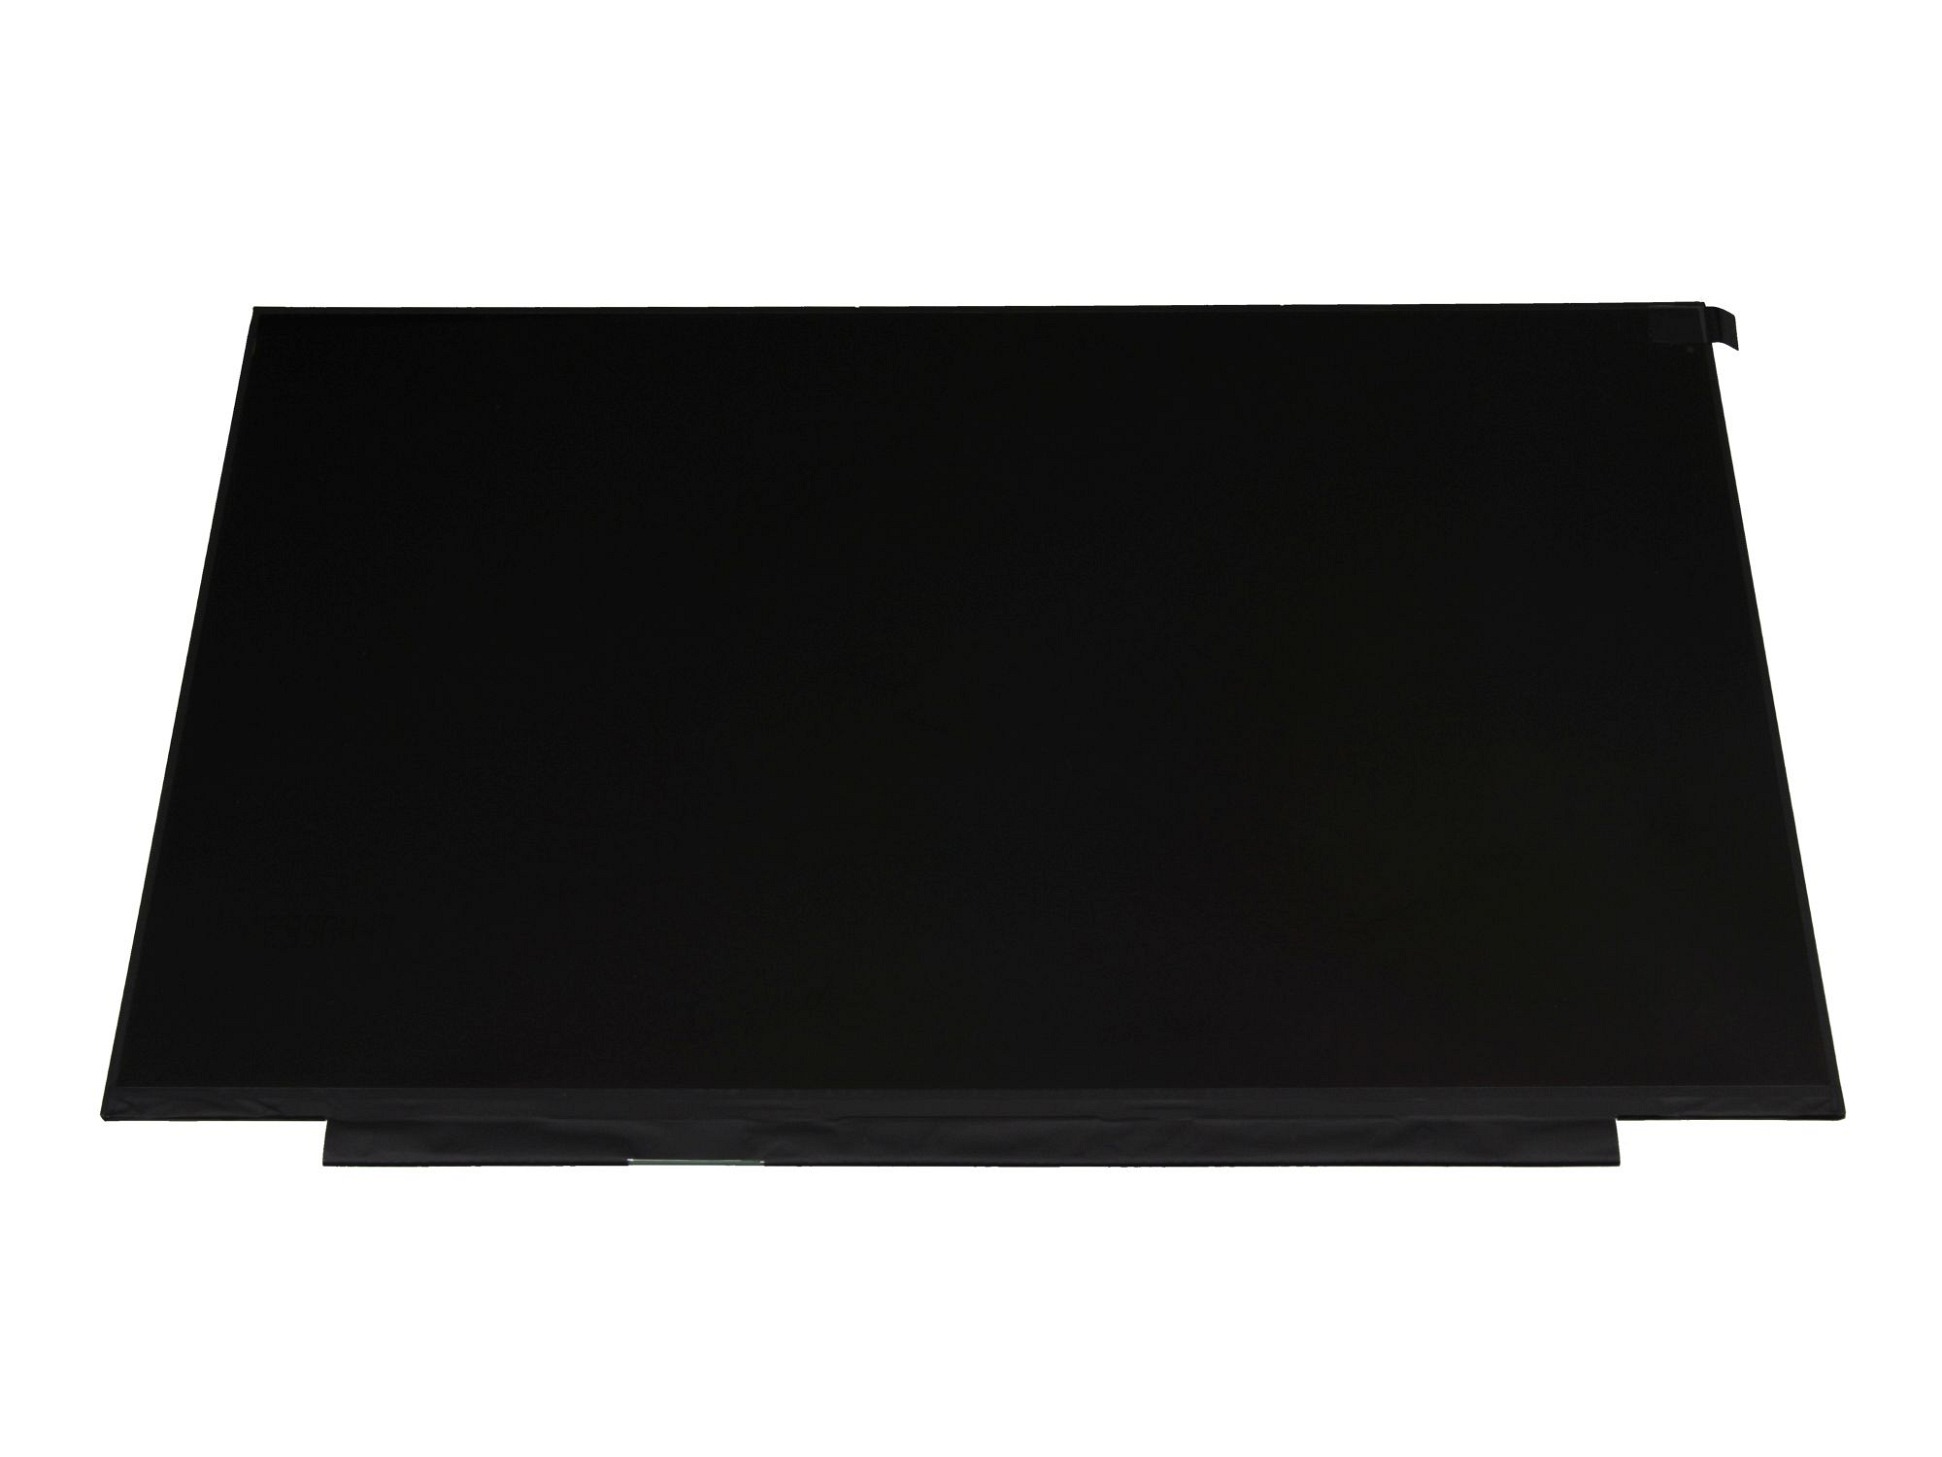 LG LP173WFG-SPB2 144Hz IPS Display (1920x1080) matt slimline